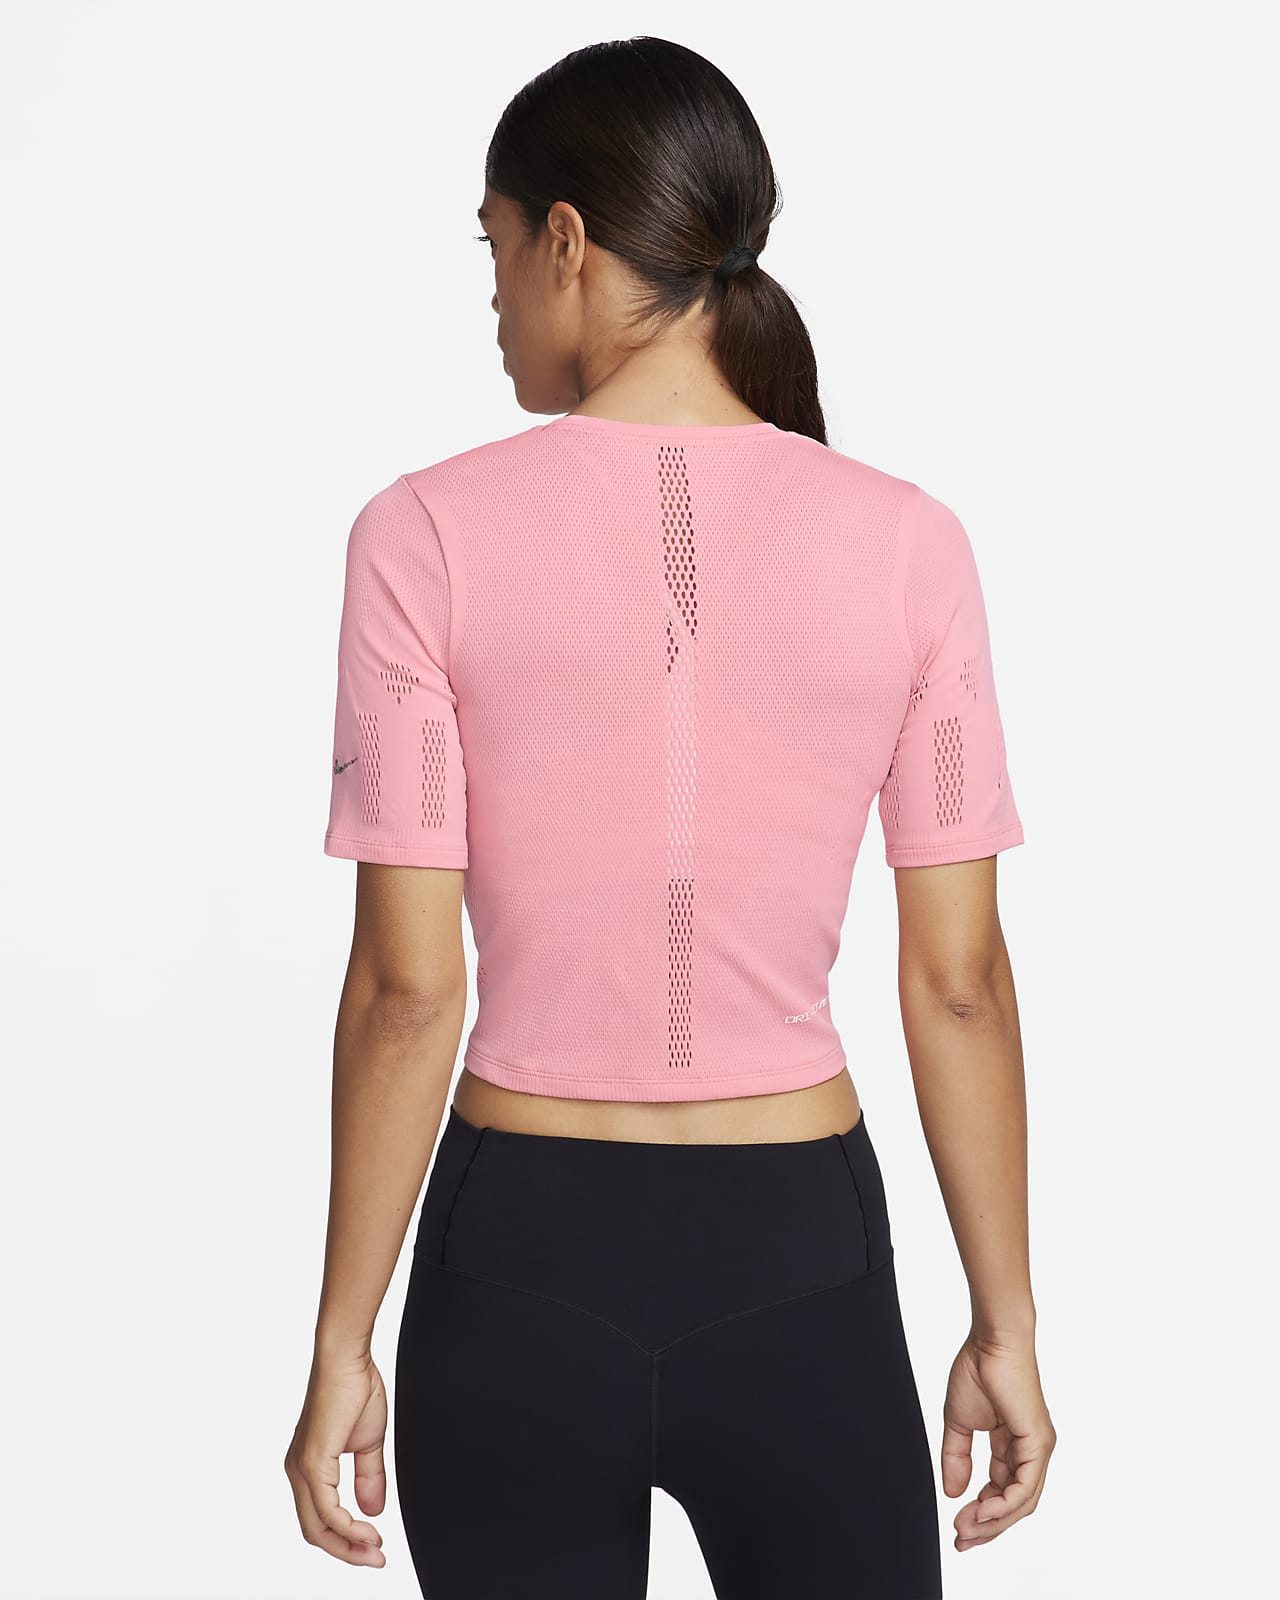 Nike Yoga Luxe Women's Short Sleeve Top - ShopStyle